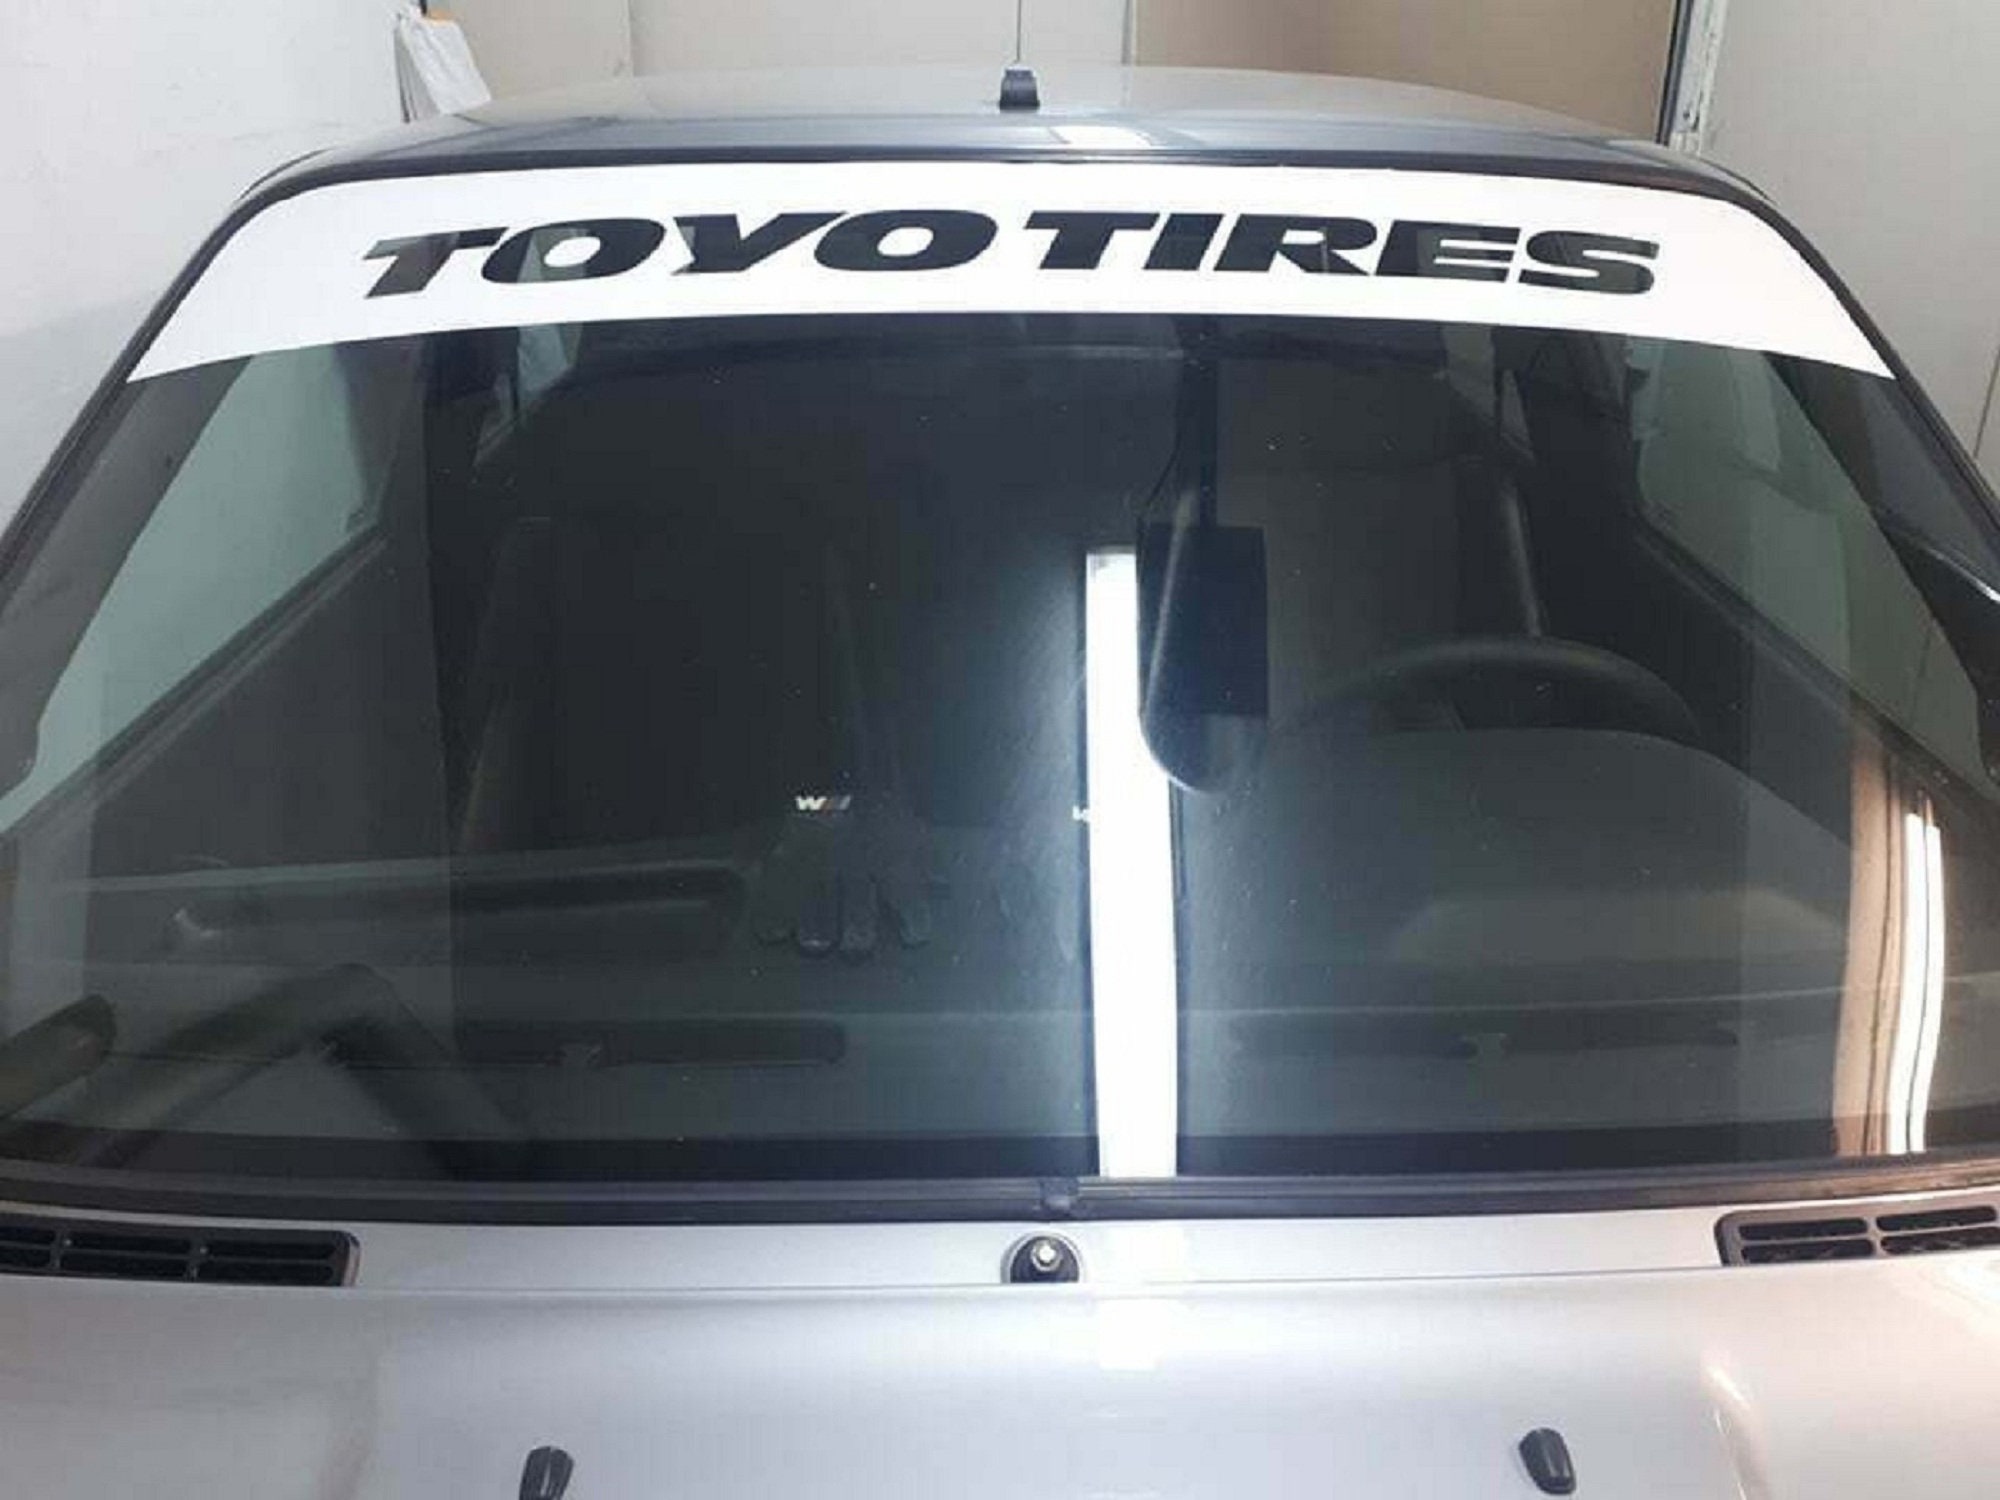 Toyota Racing Aufkleber Aufkleber Autofenster Windschutzscheibe